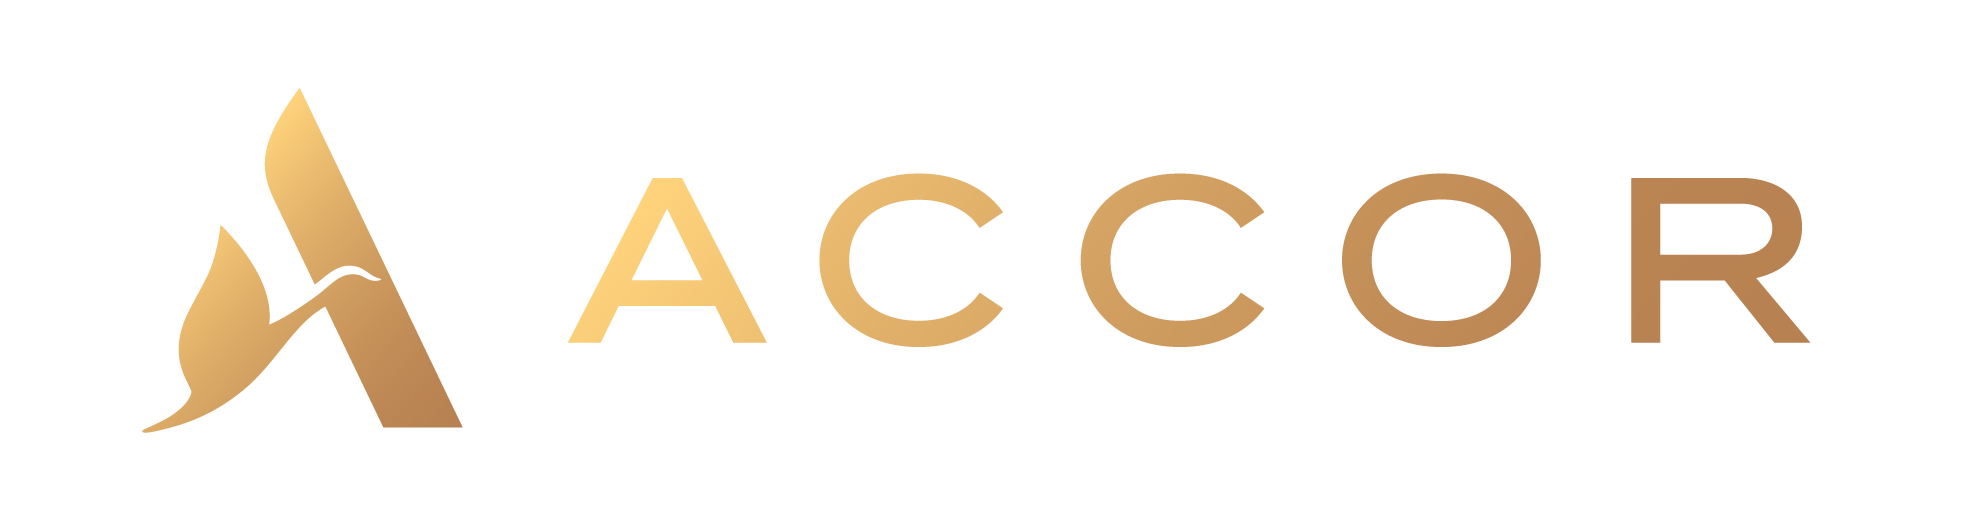 Accor Group